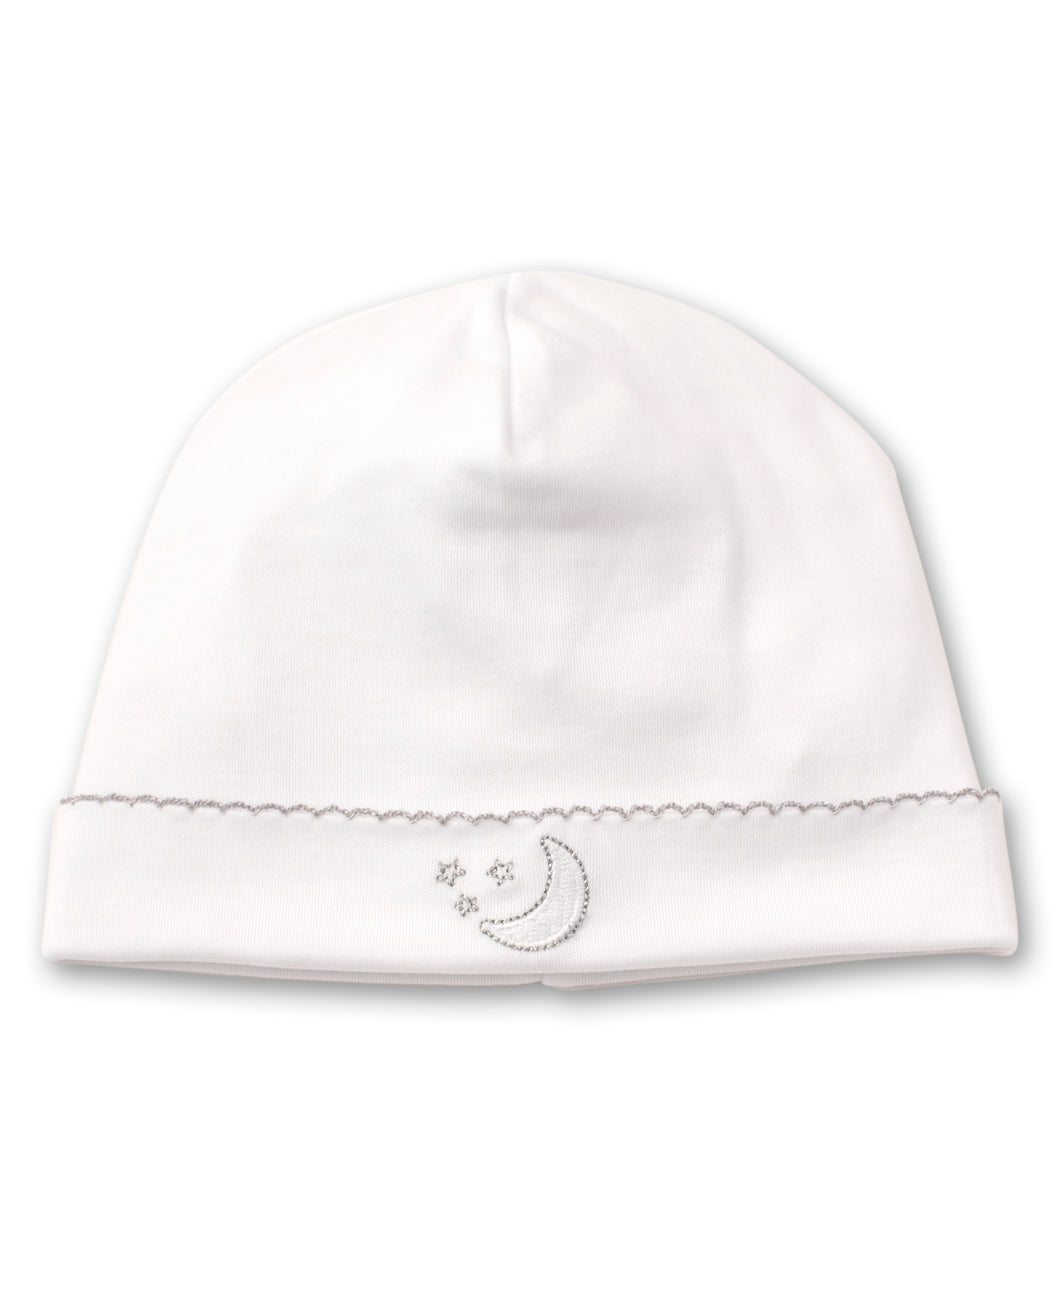 Pique Night Moon Hat - White